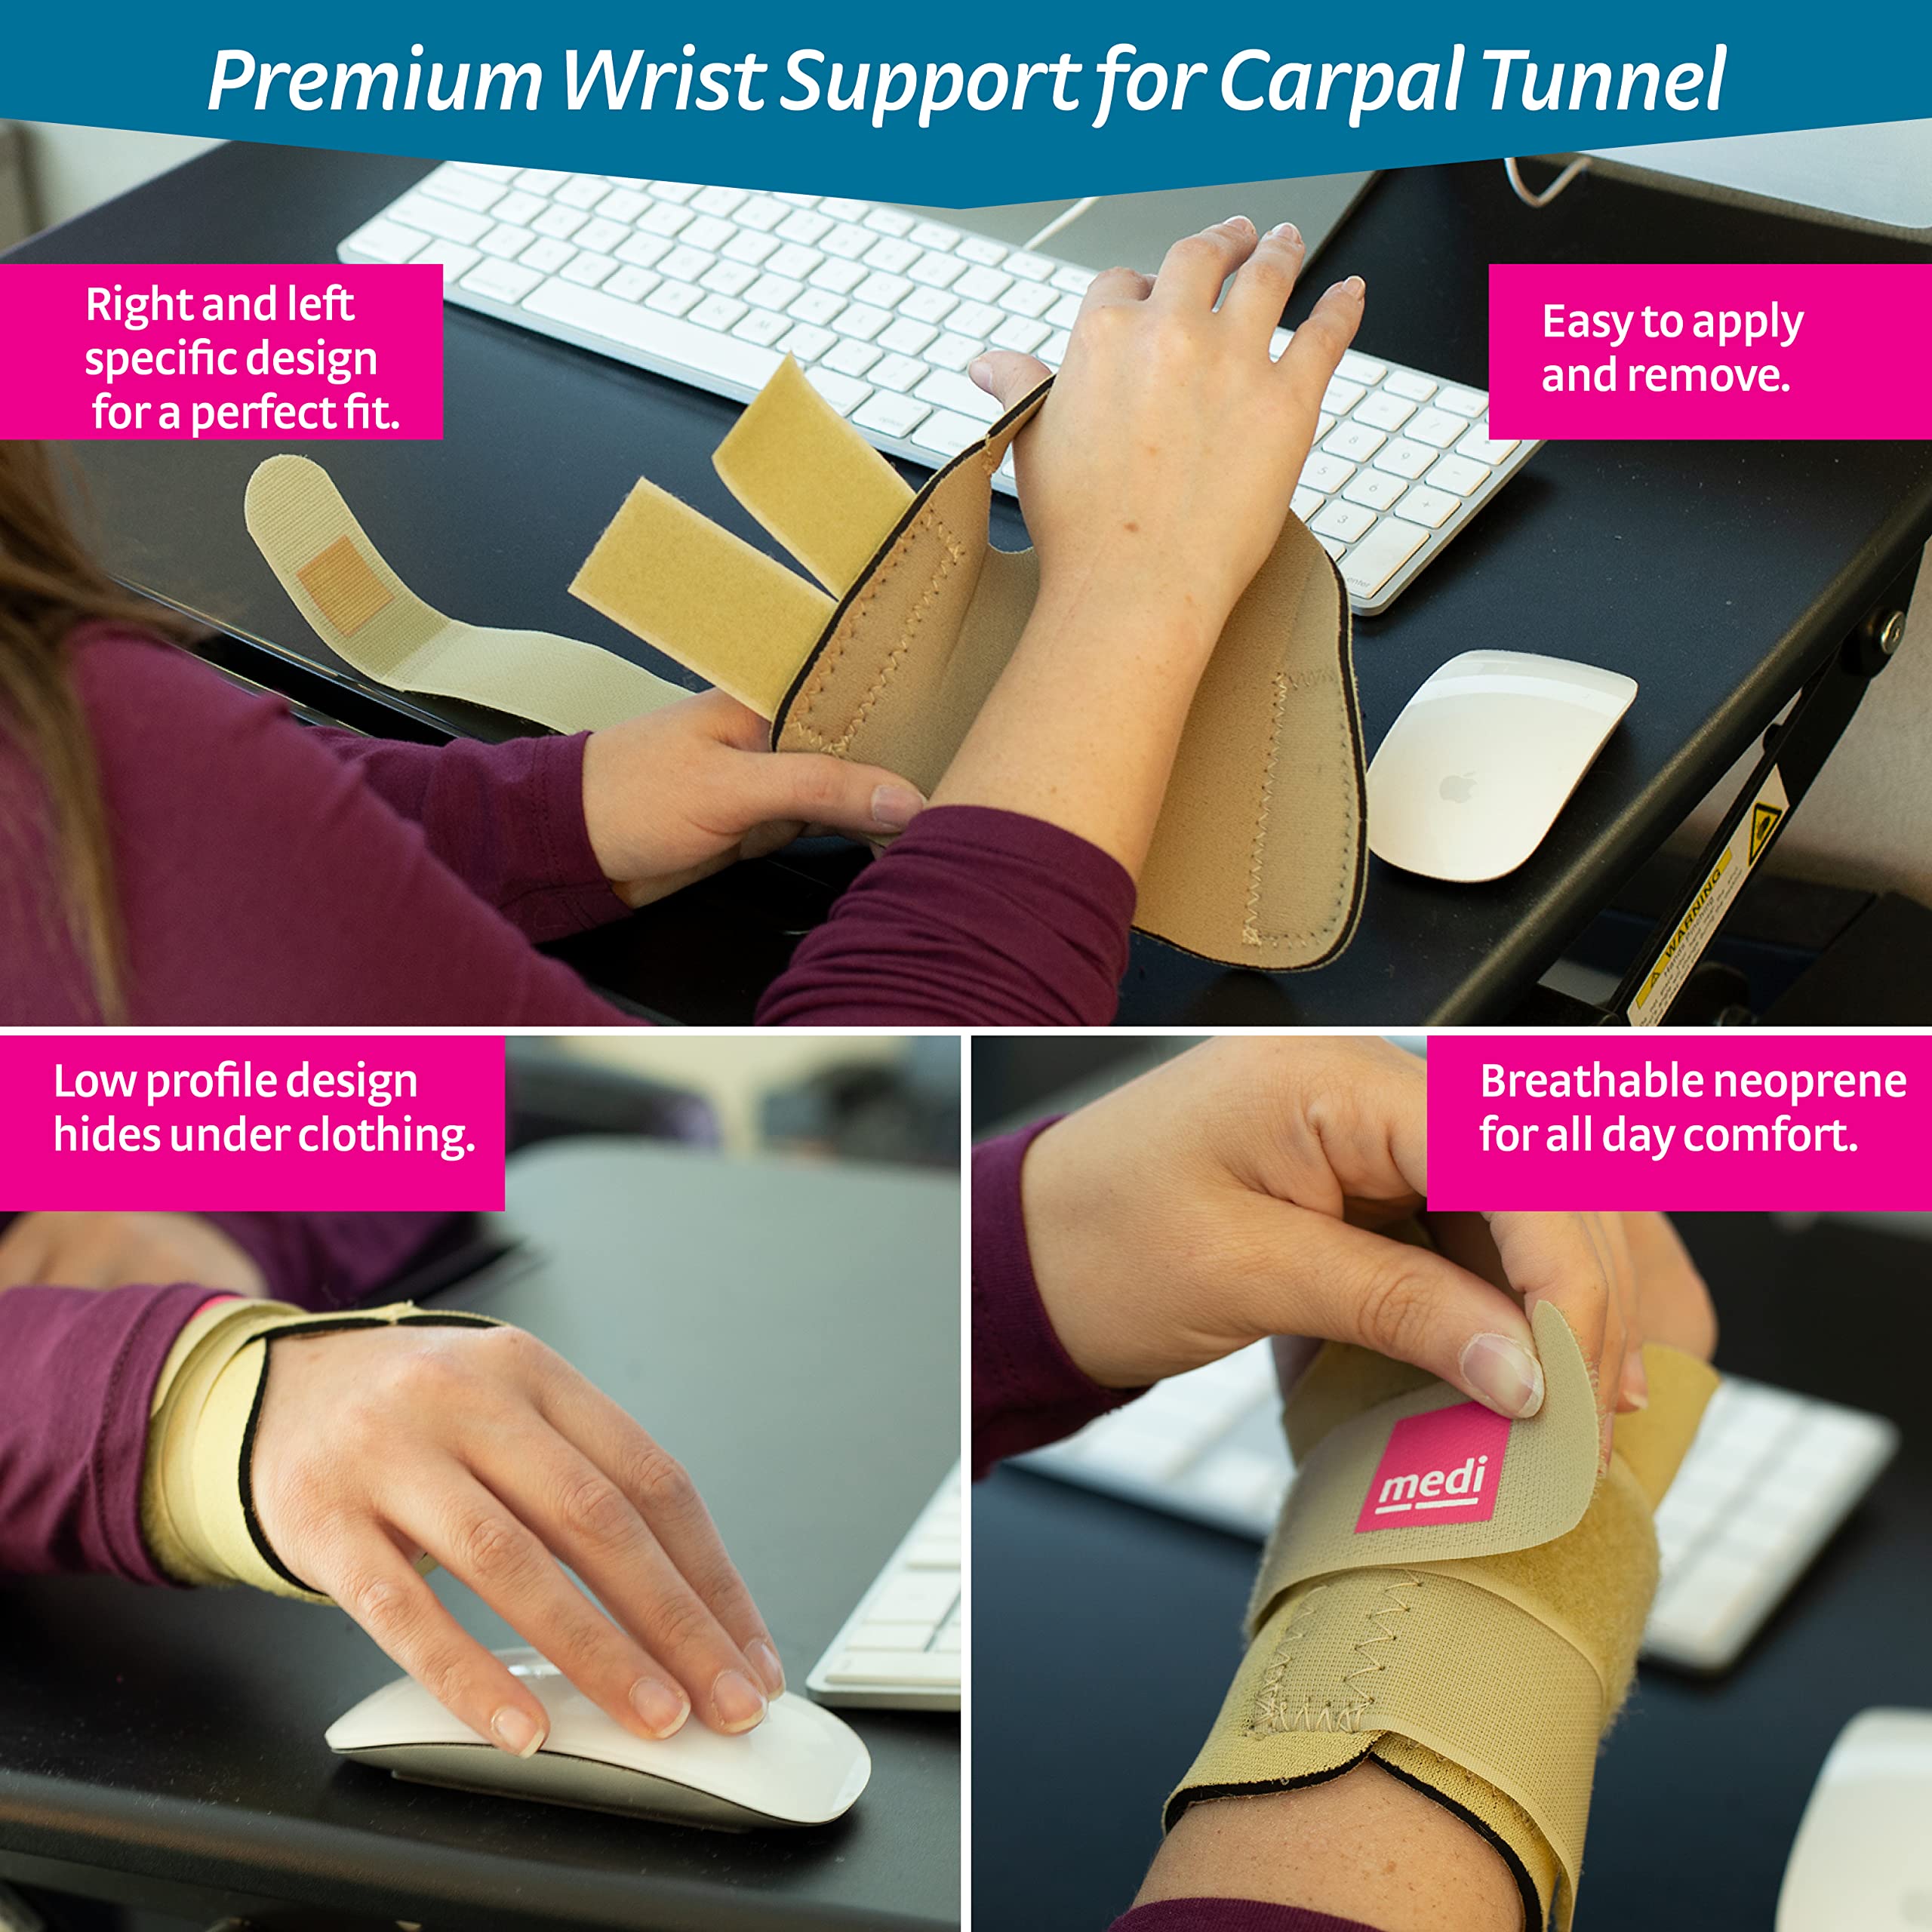 medi Neoprene Carpal Tunnel Wrist Support - carpal tunnel, sprains, & weak wrists